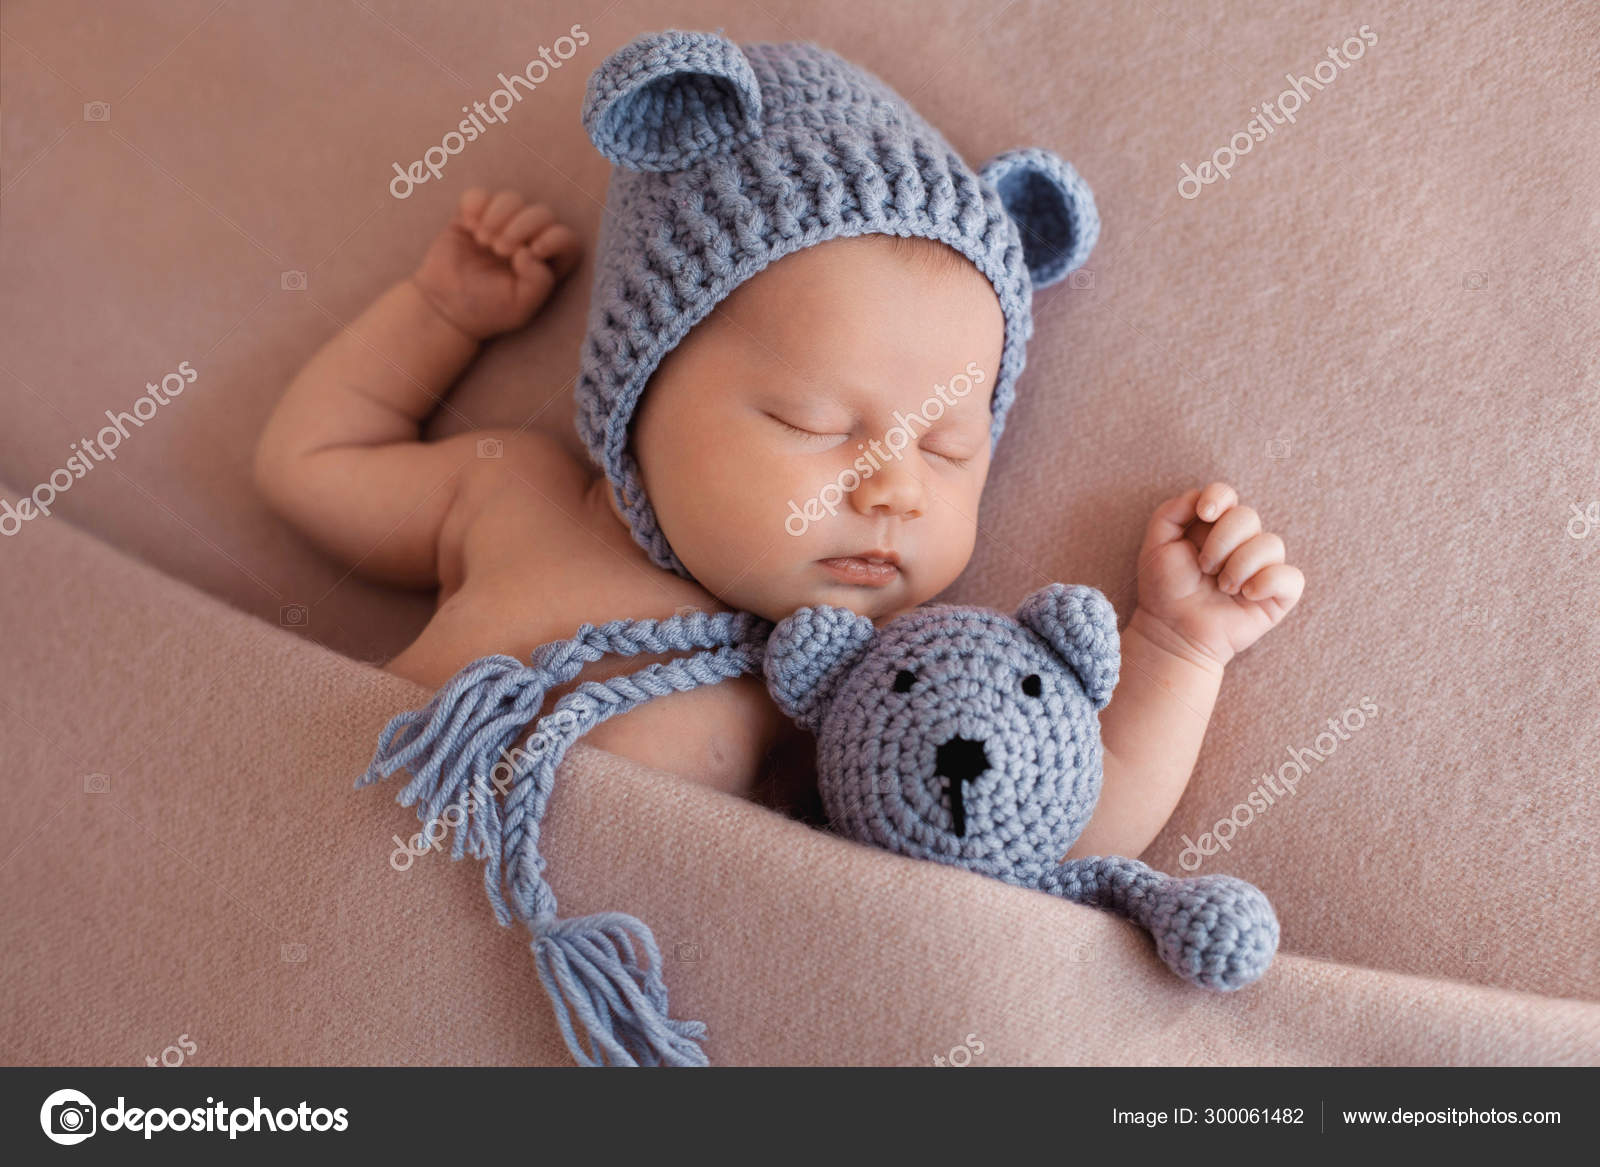 teddy bear for newborn baby girl